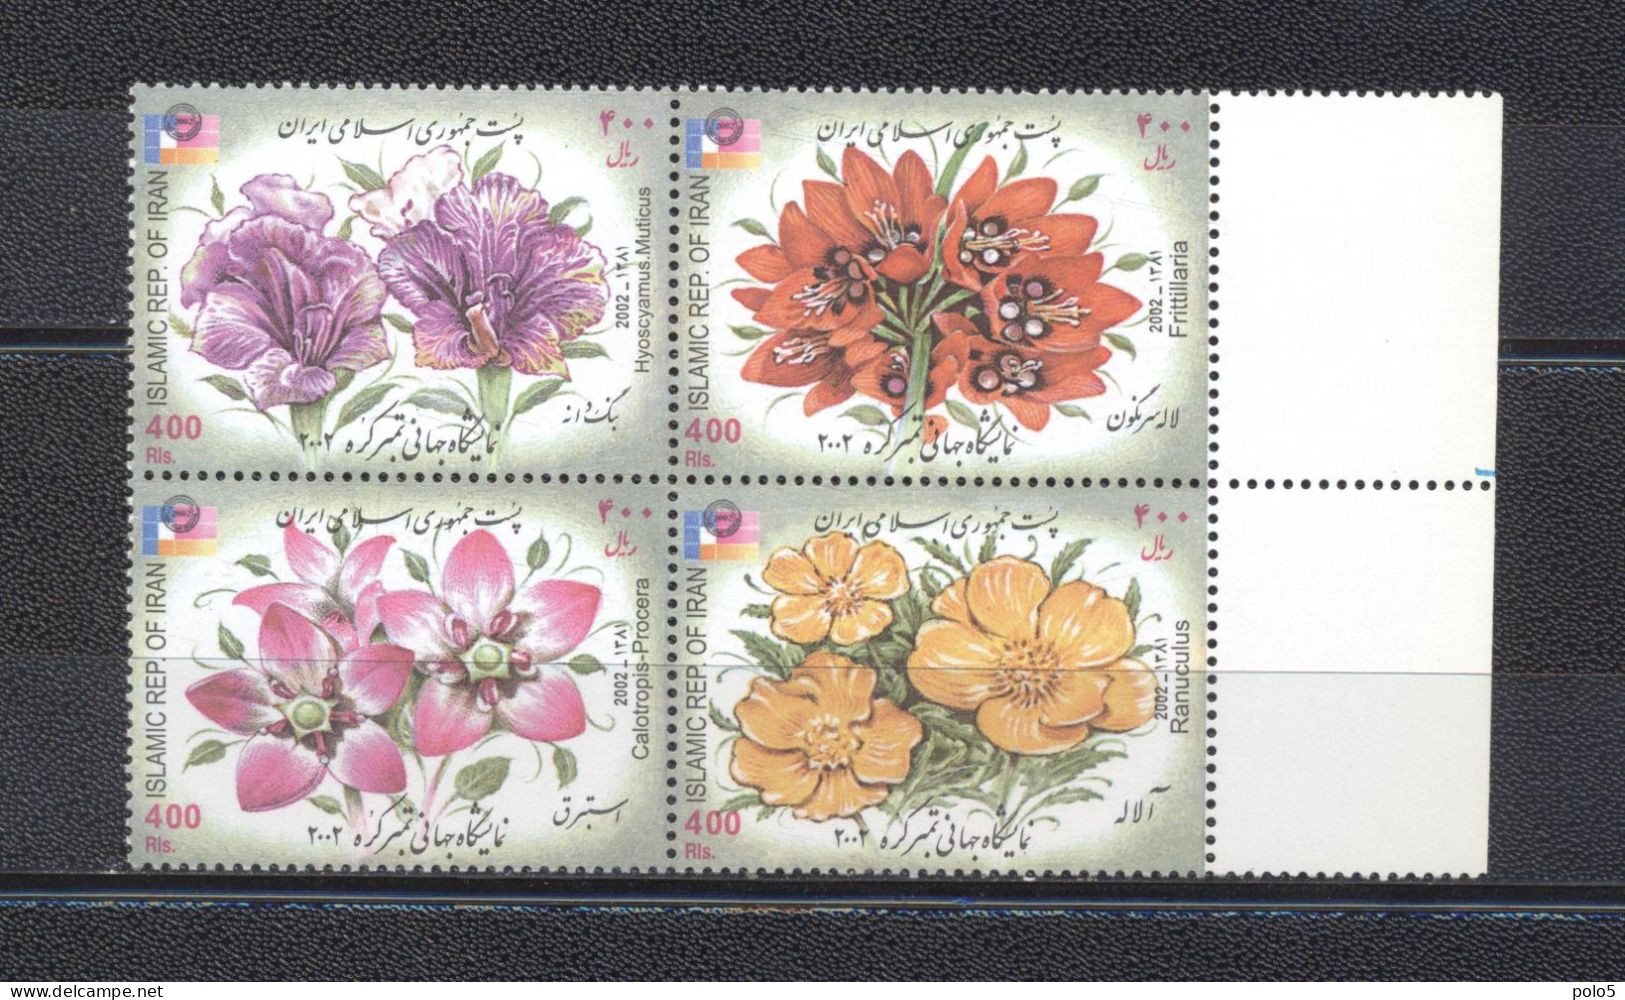 Iran 2002- Flowers- International Stamp Exhibition Philakorea , Seoul-South Korea Block Of 4 V - Iran